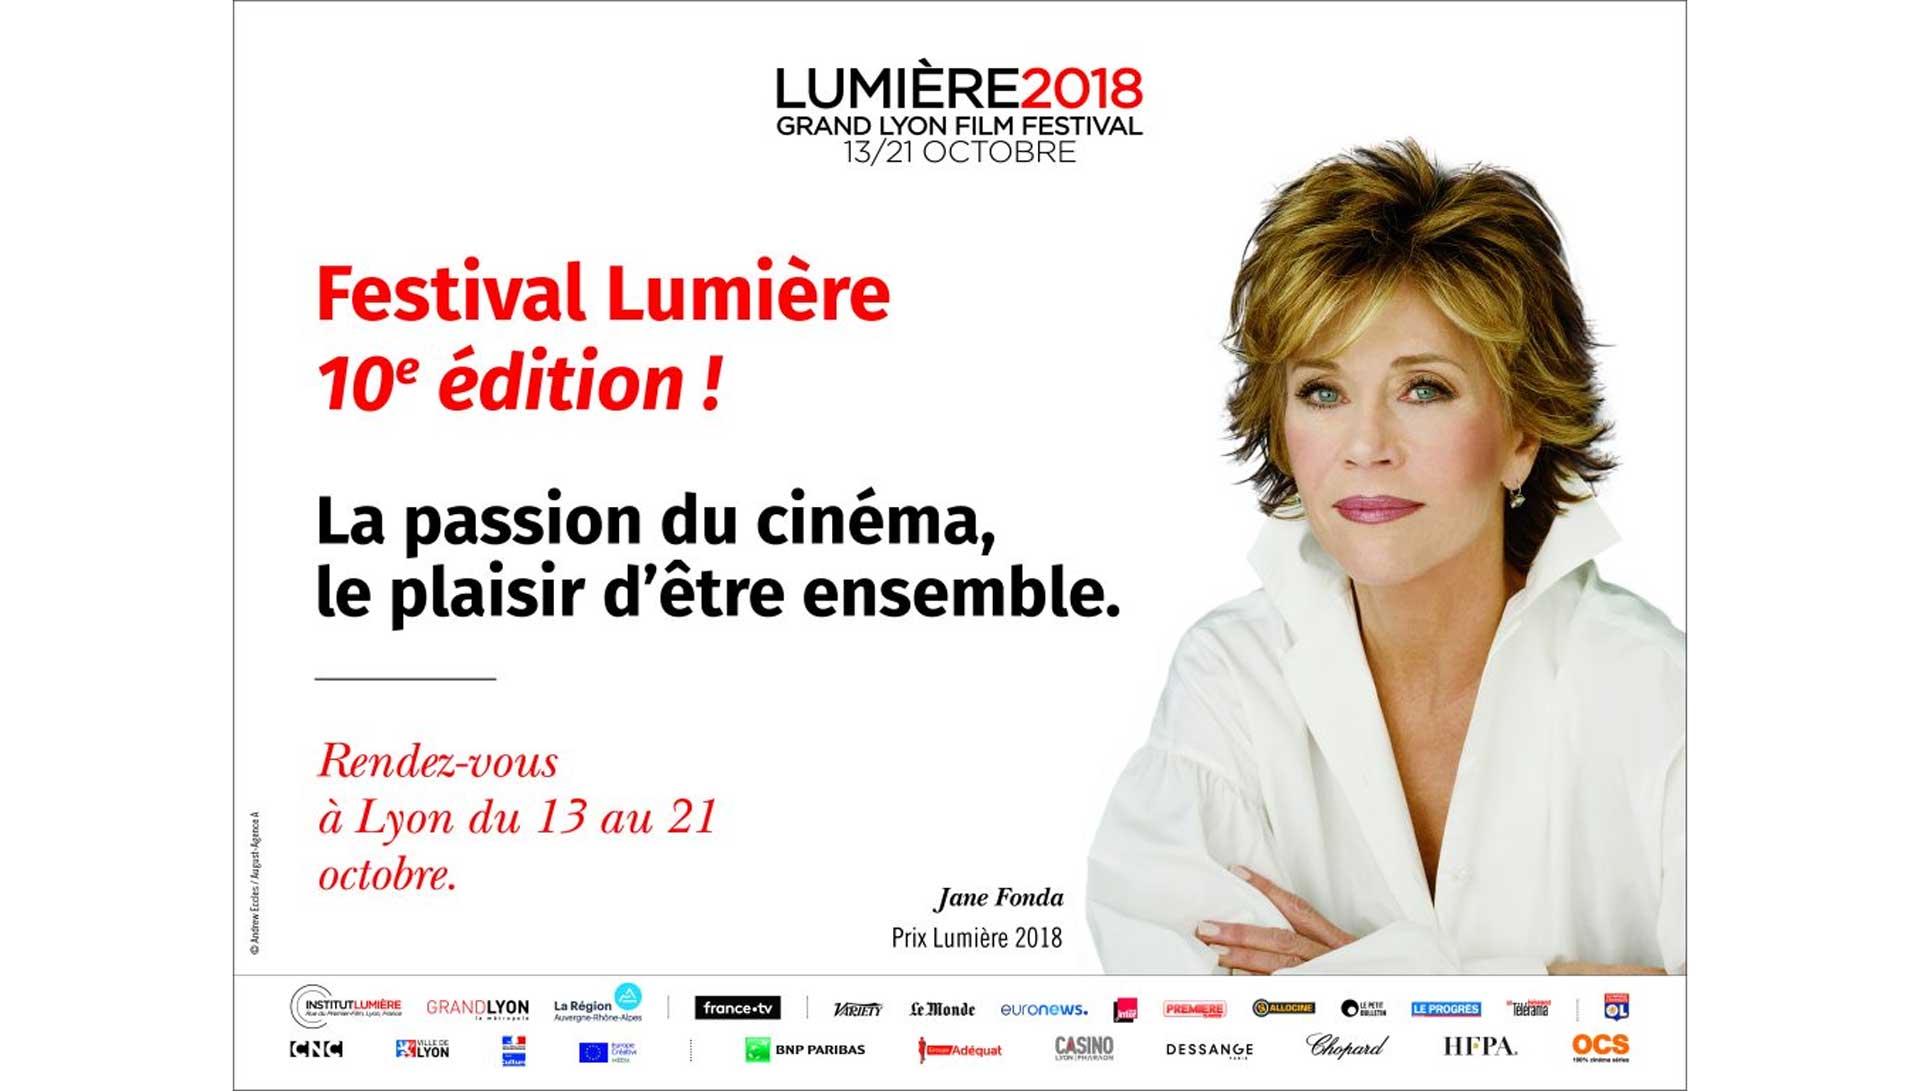 Festival Lumière 2018 - Grand Lyon Film Festival